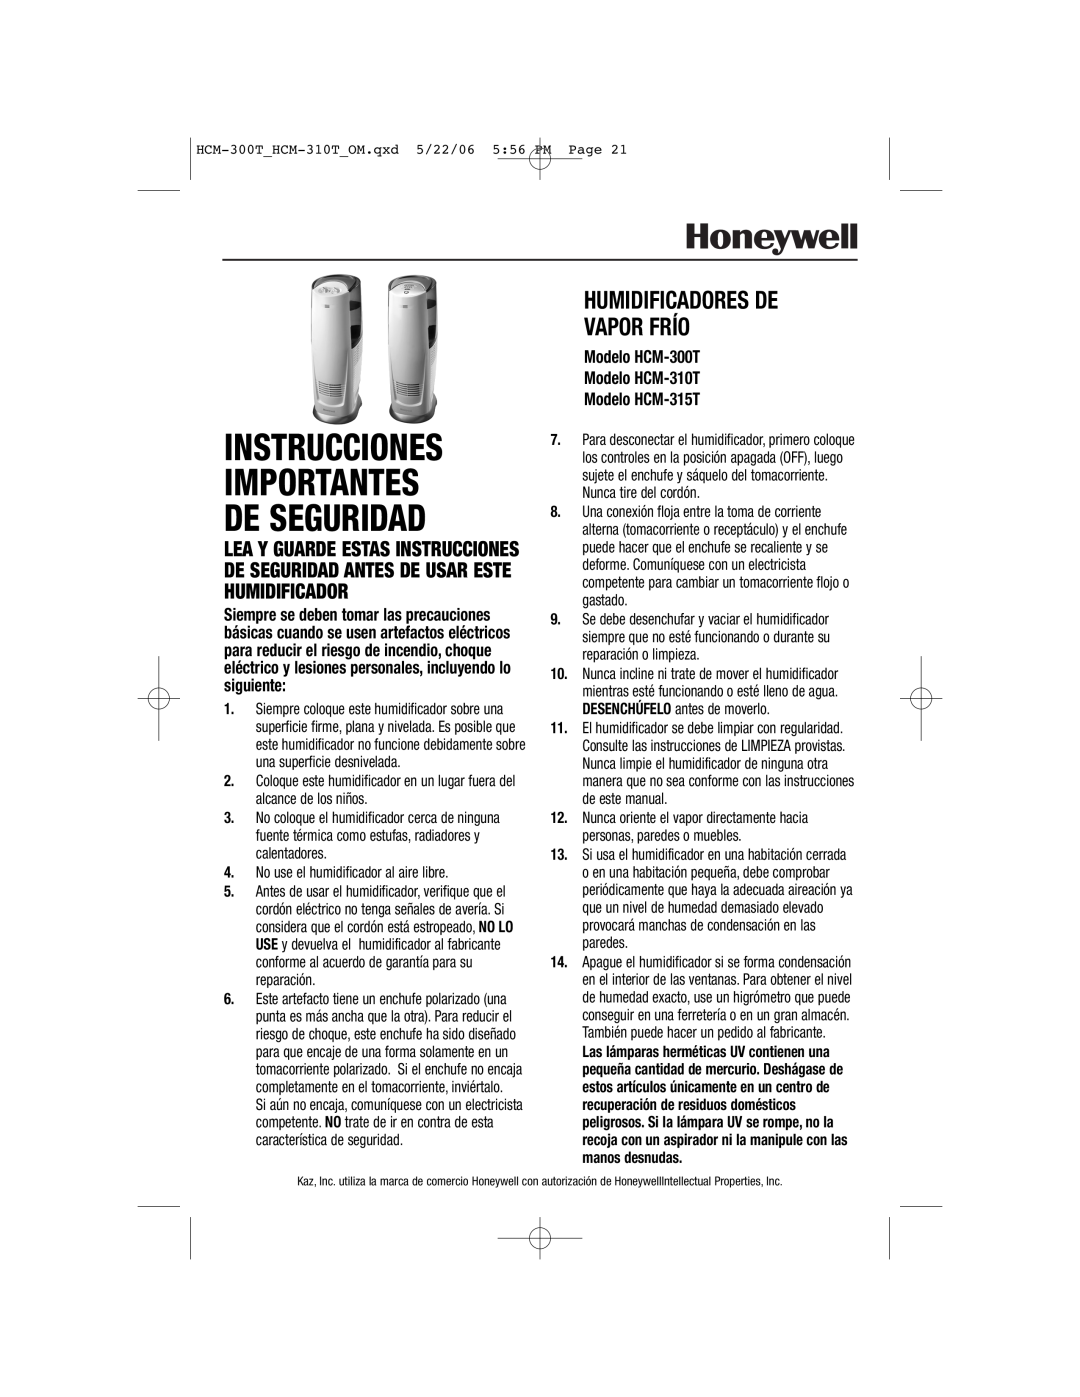 Honeywell HCM-315T, HCM-310T, HCM-300T Instrucciones Importantes De Seguridad, Humidificadores De Vapor Frío 